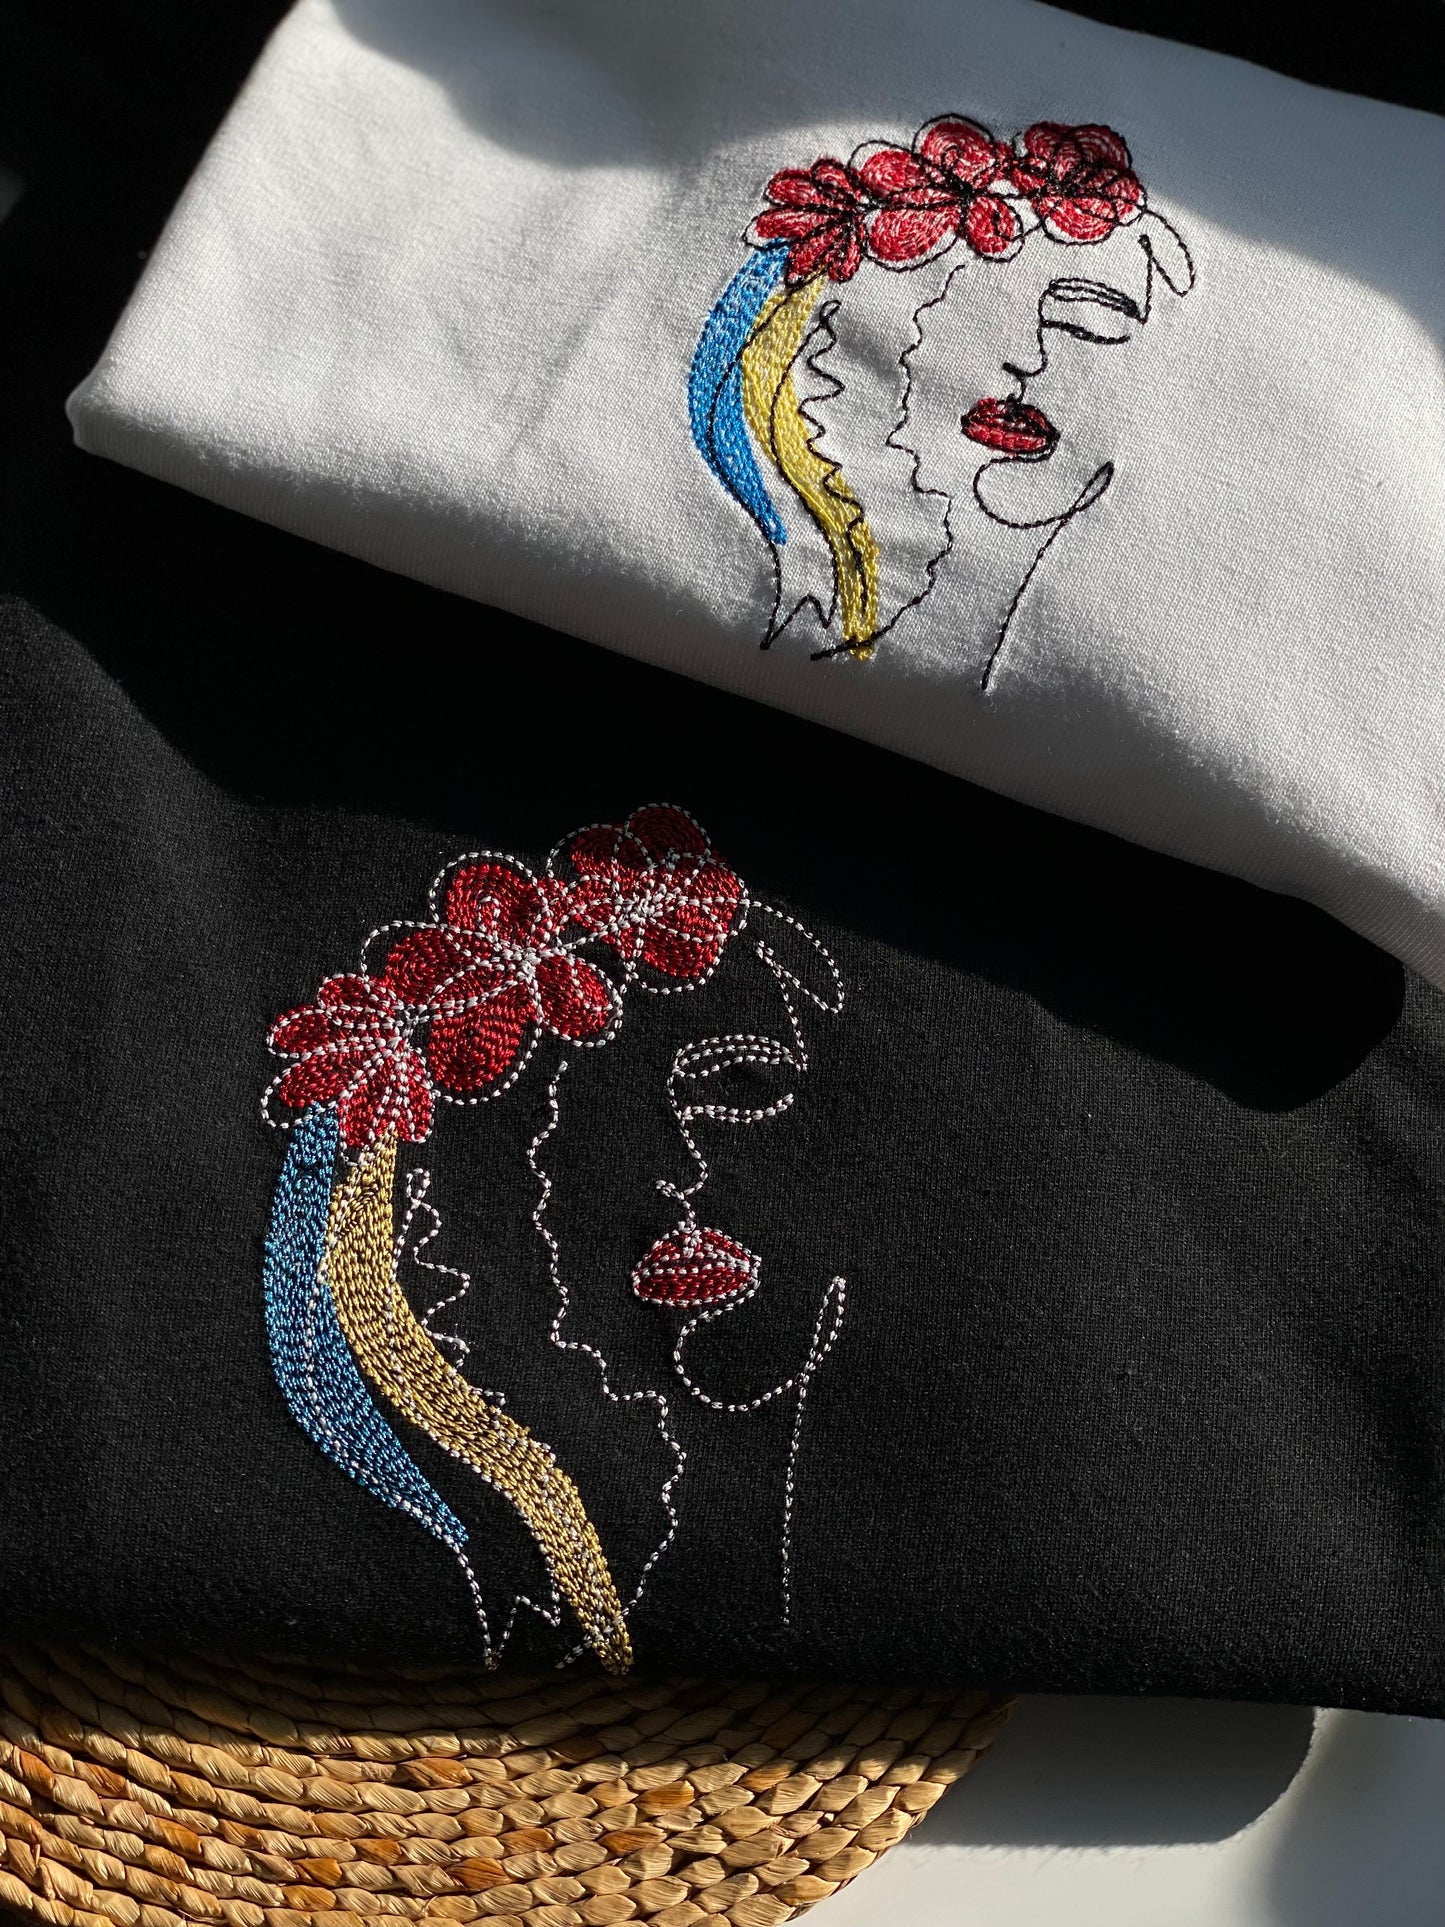 ukrainian girl woman embroidery patriotic t-shirt